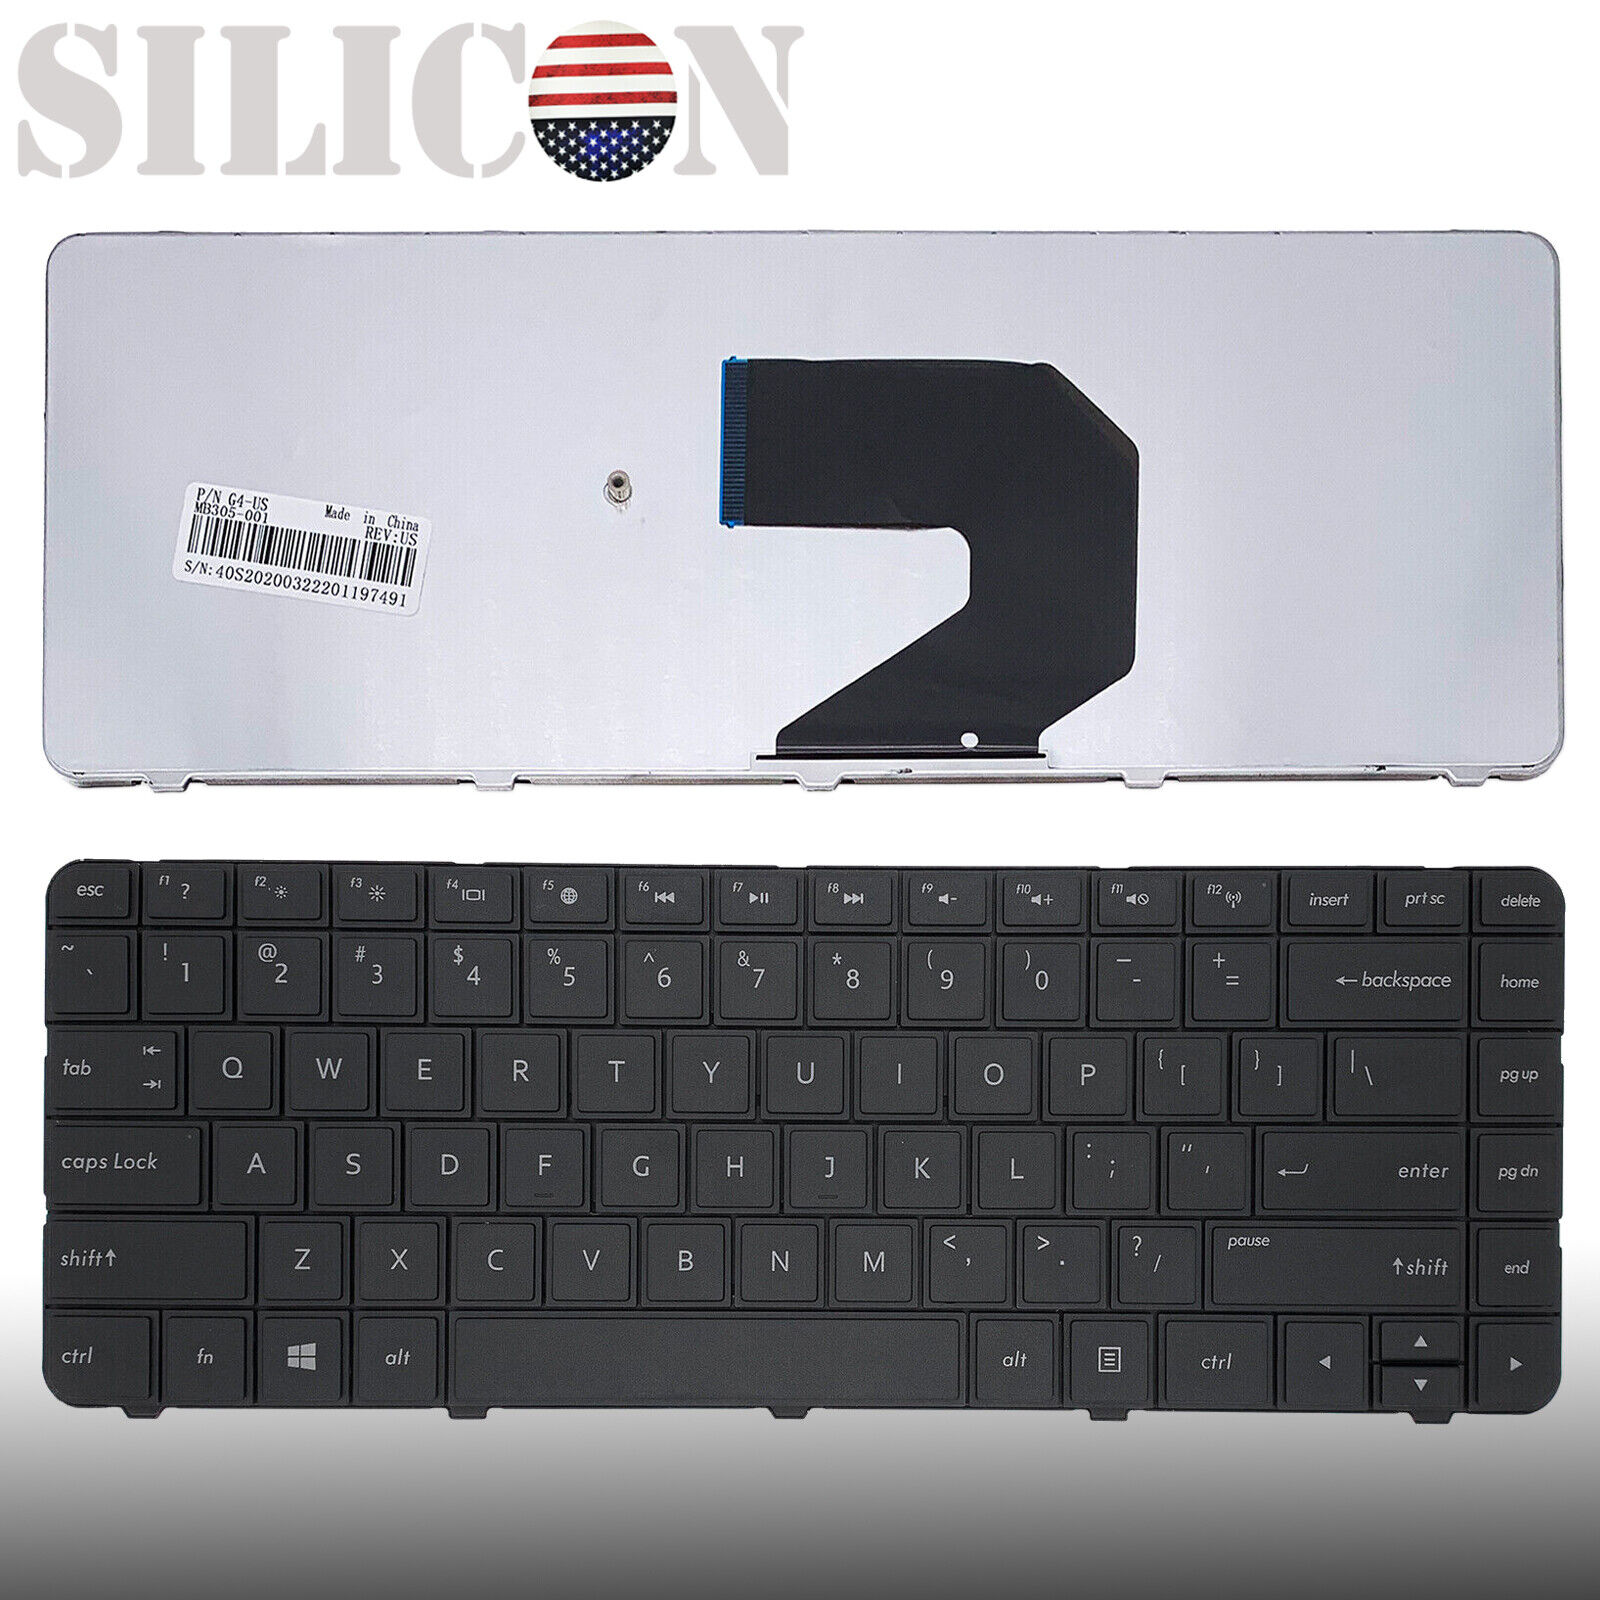 NEW Fit For HP Compaq Presario CQ57 CQ58 HP 2000 1000 G6-1000 Laptop Keyboard US